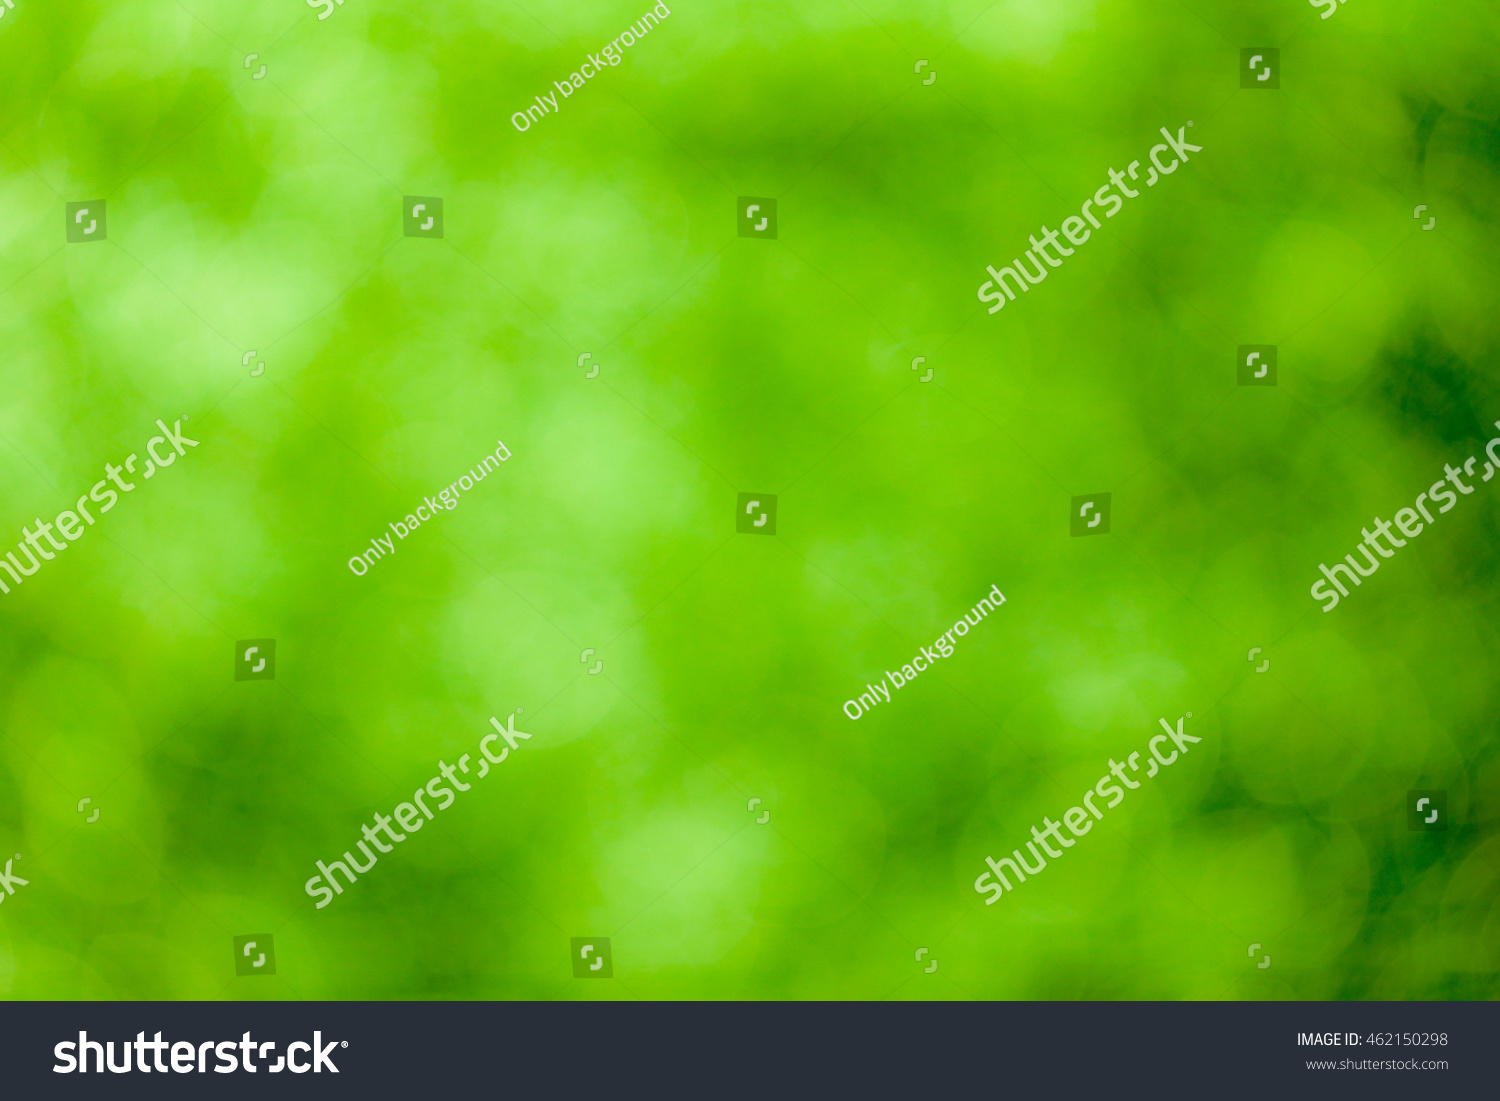 Green bokeh soft background #462150298